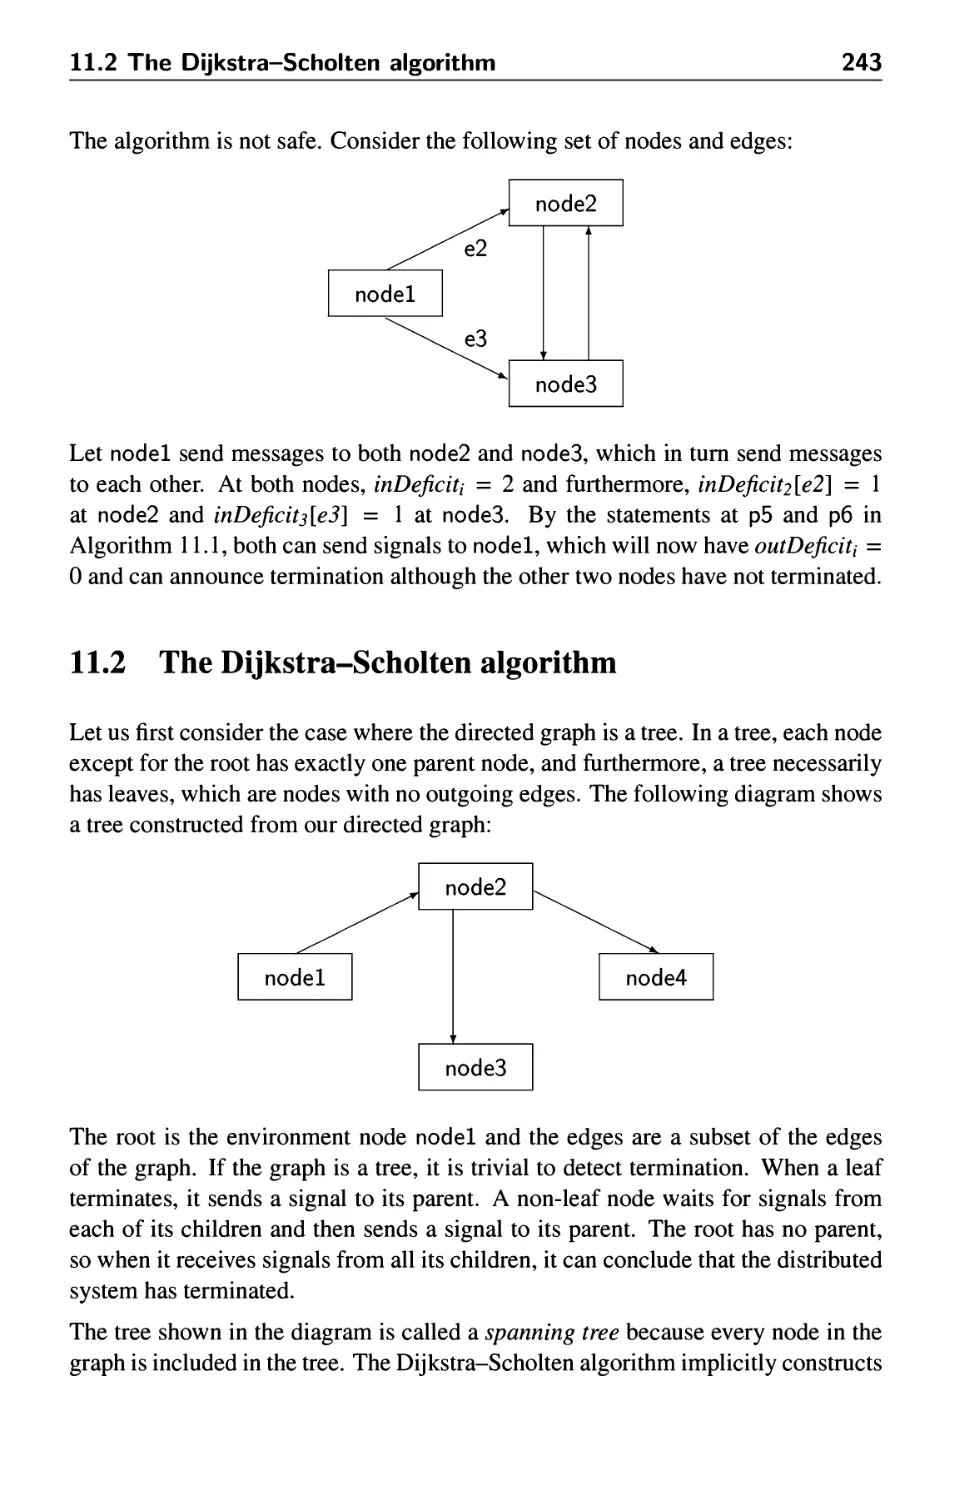 11.2 The Dijkstra-Scholten algorithm